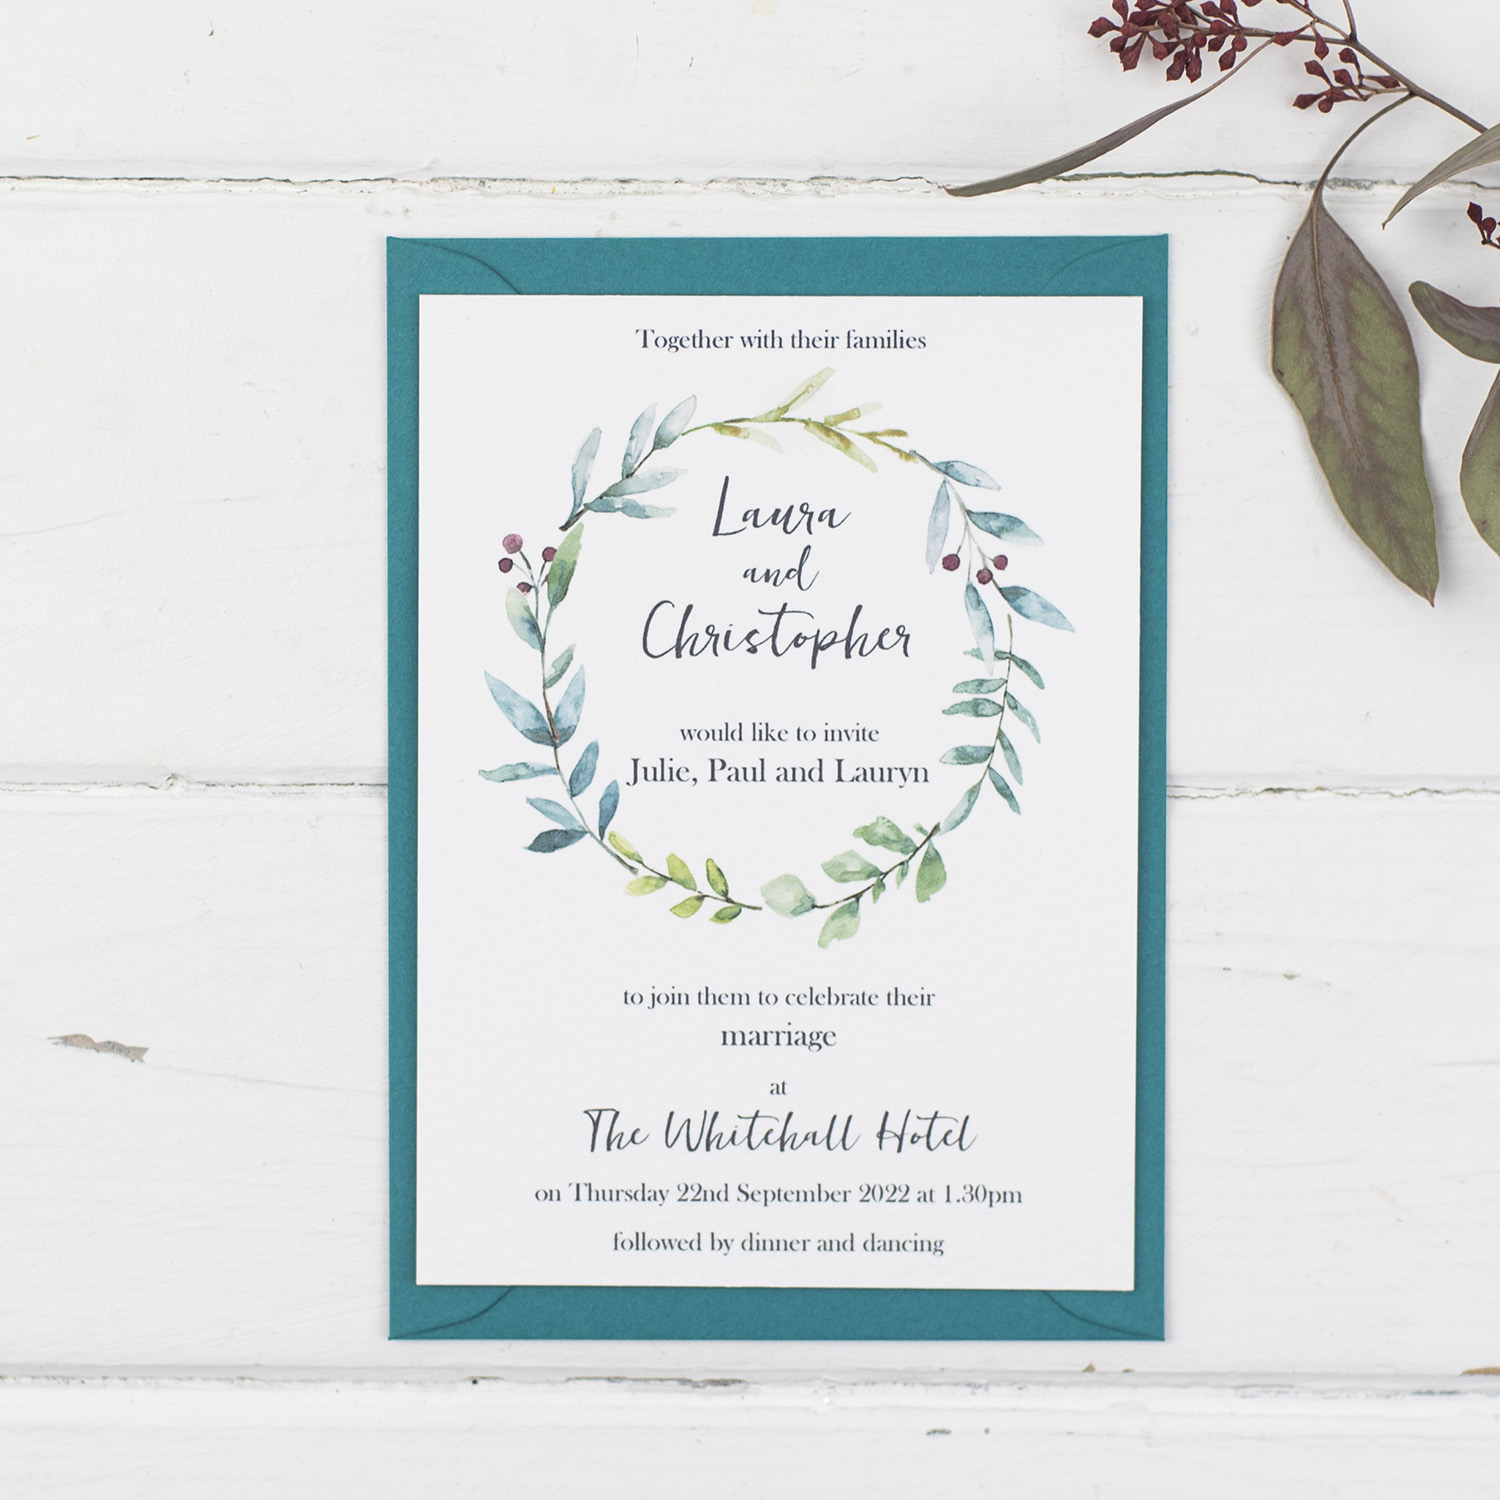 handmade wedding invitations invite painted foliage wreath textured white teal envelope